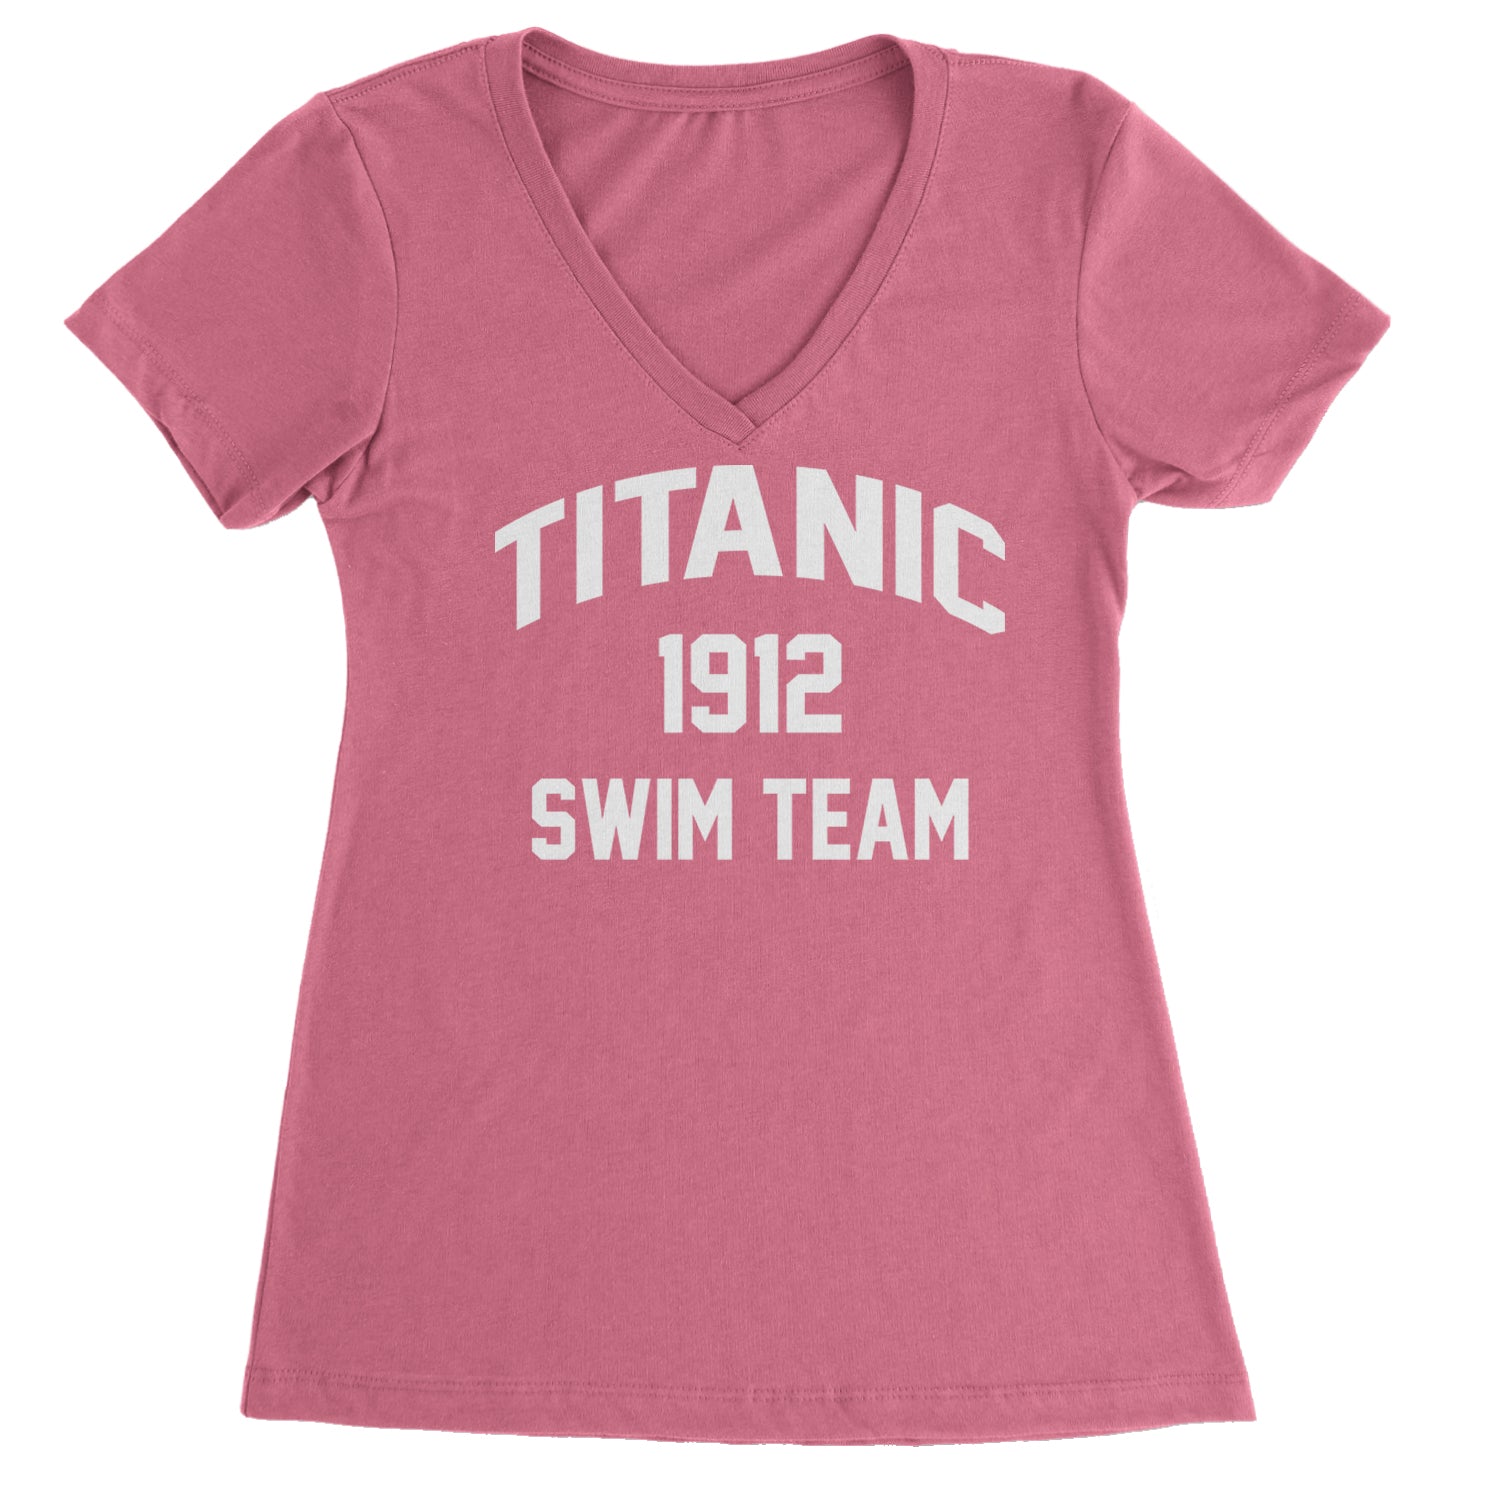 Titanic Swim Team 1912 Funny Cruise Ladies V-Neck T-shirt Hot Pink